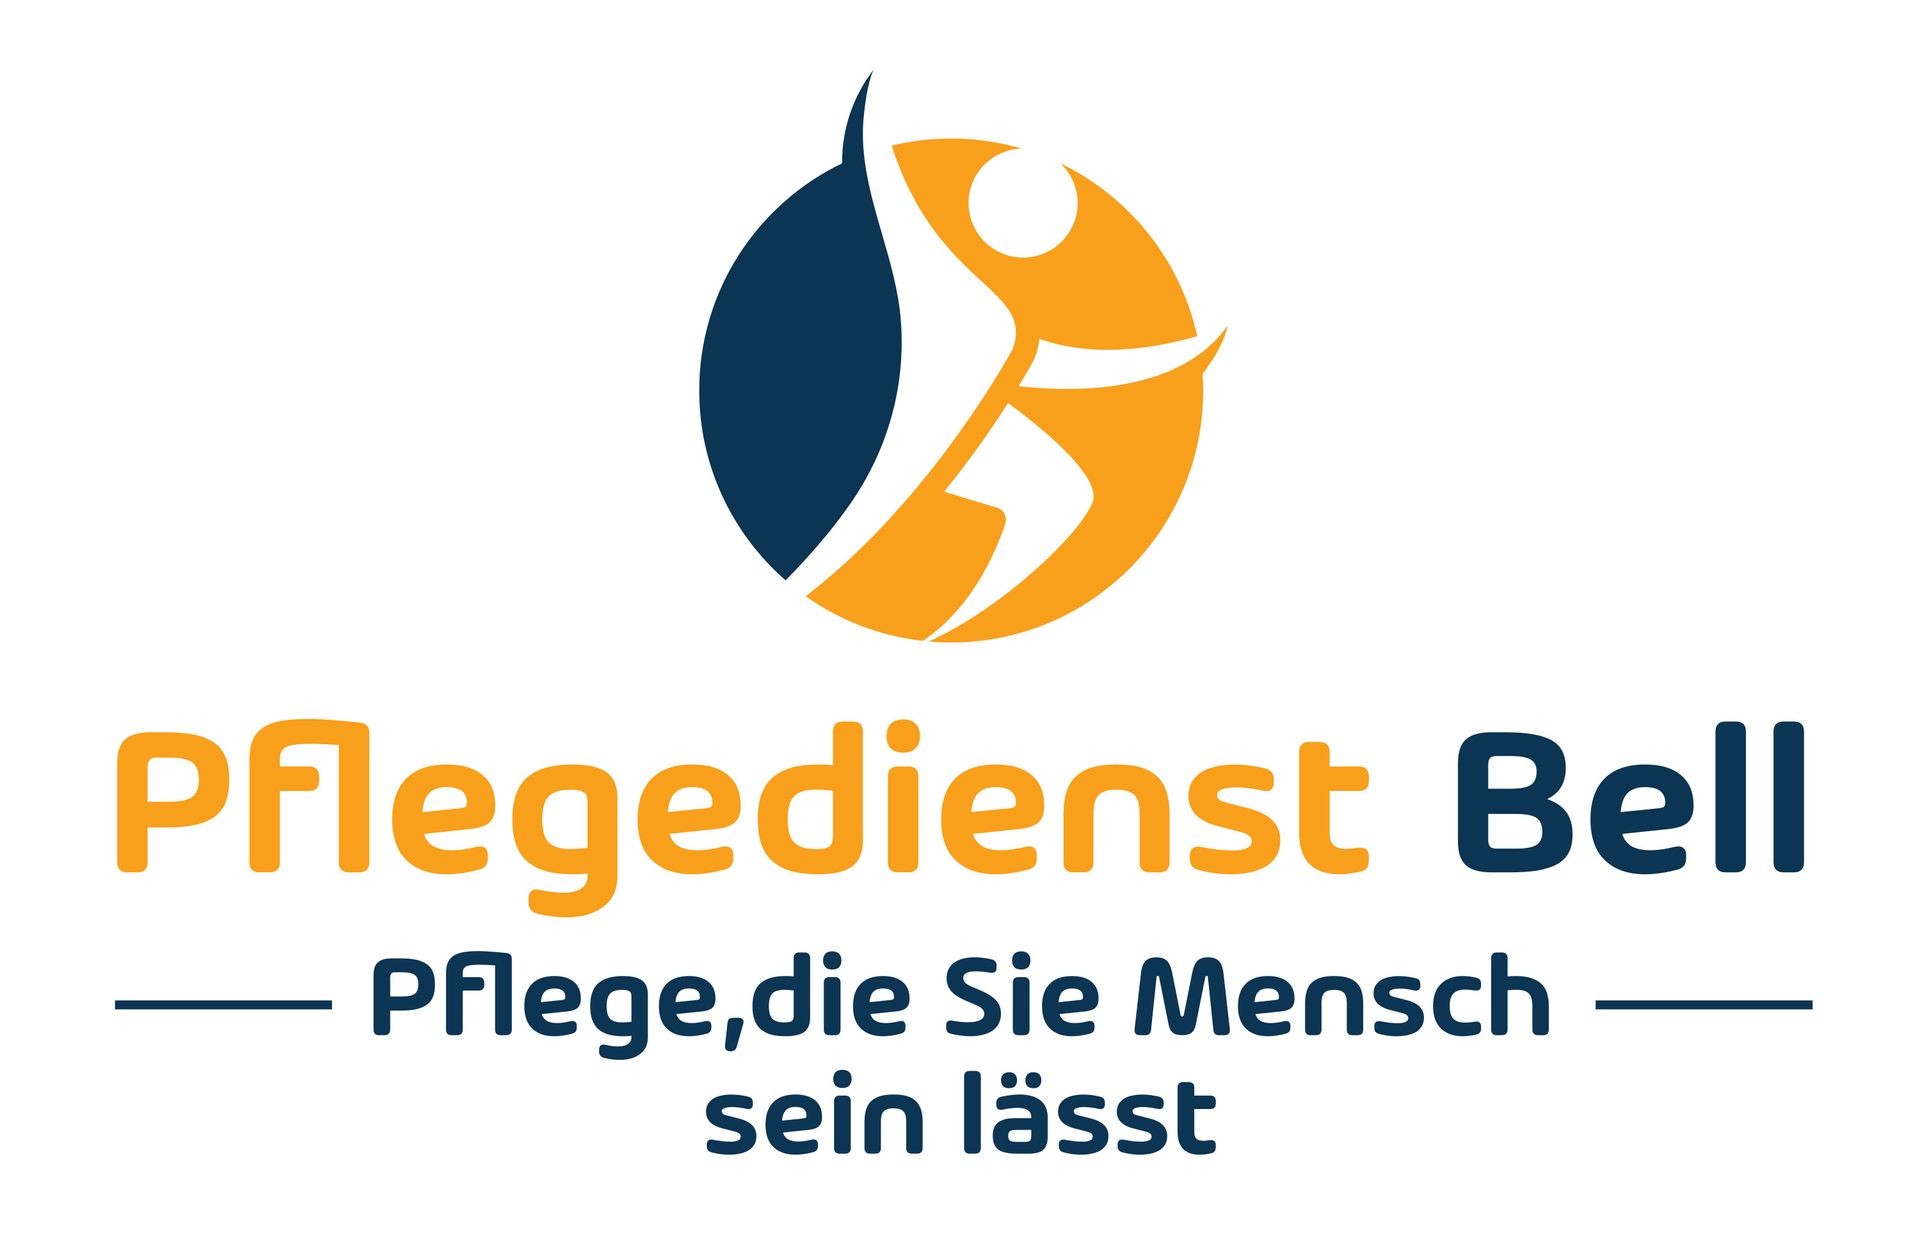 Pflegedienst Bell GmbH - Logo